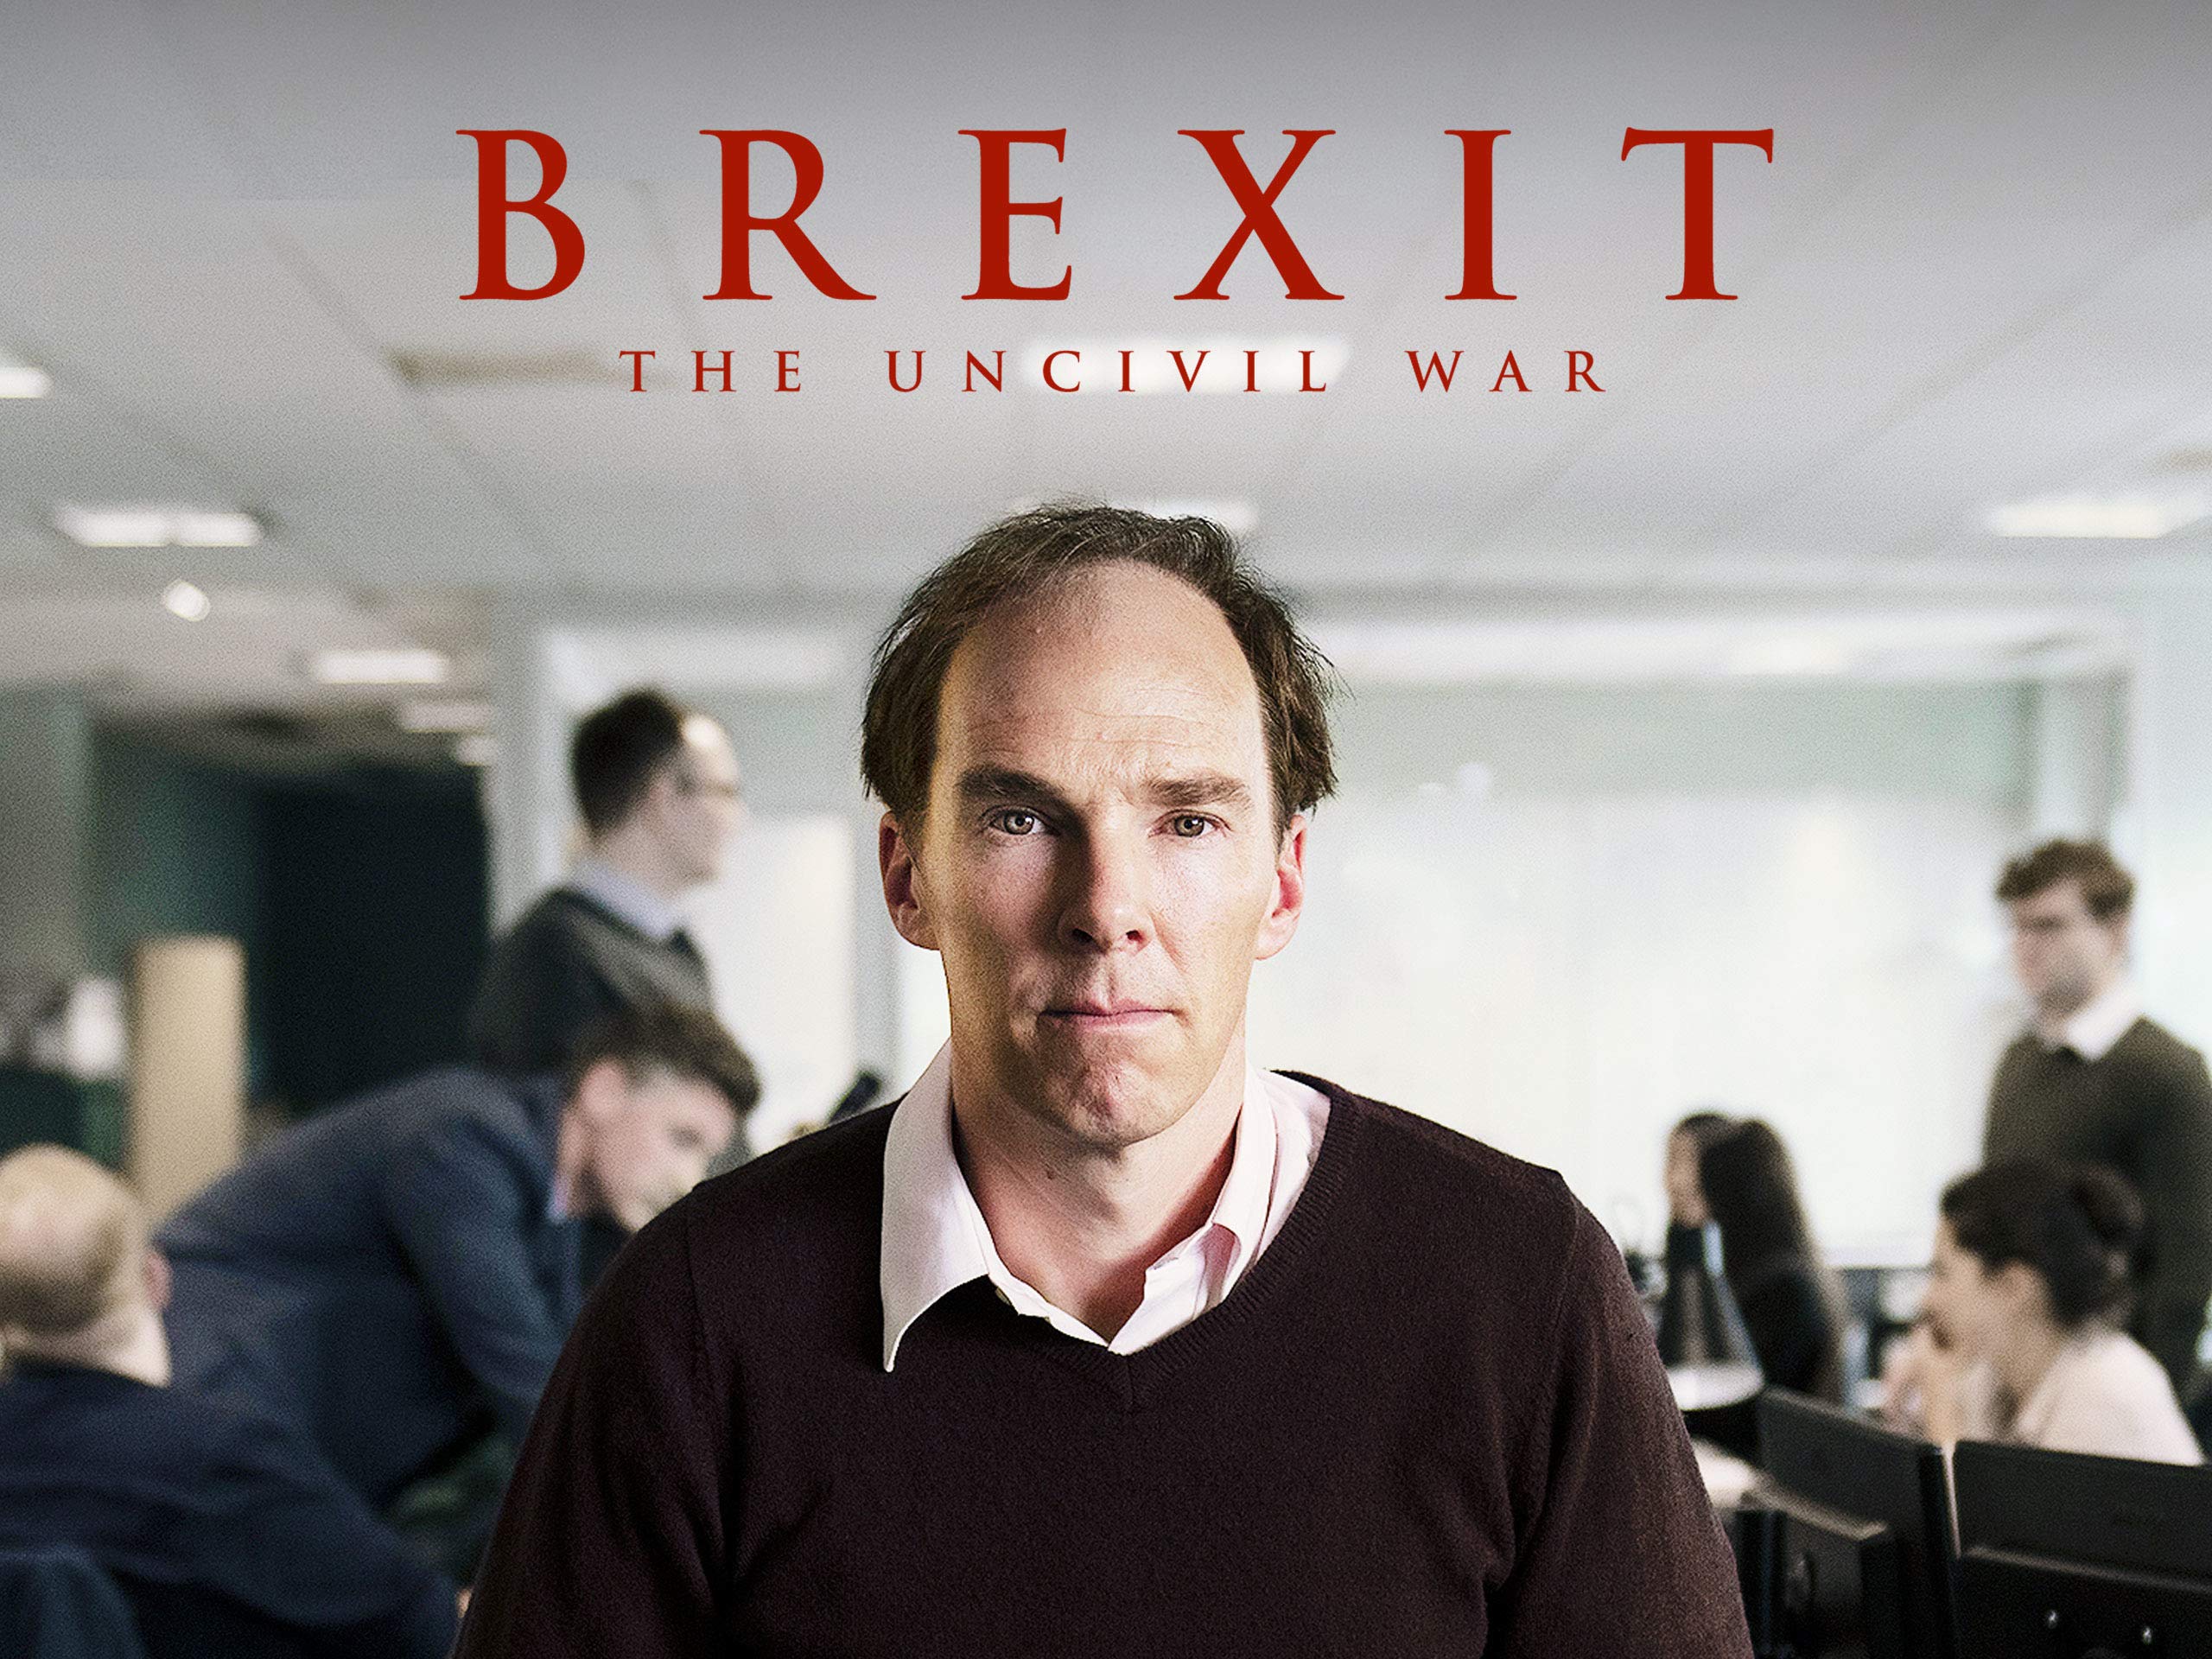 Brexit: The Uncivil War, la nueva película de Europa + que narra la historia detrás del Brexit